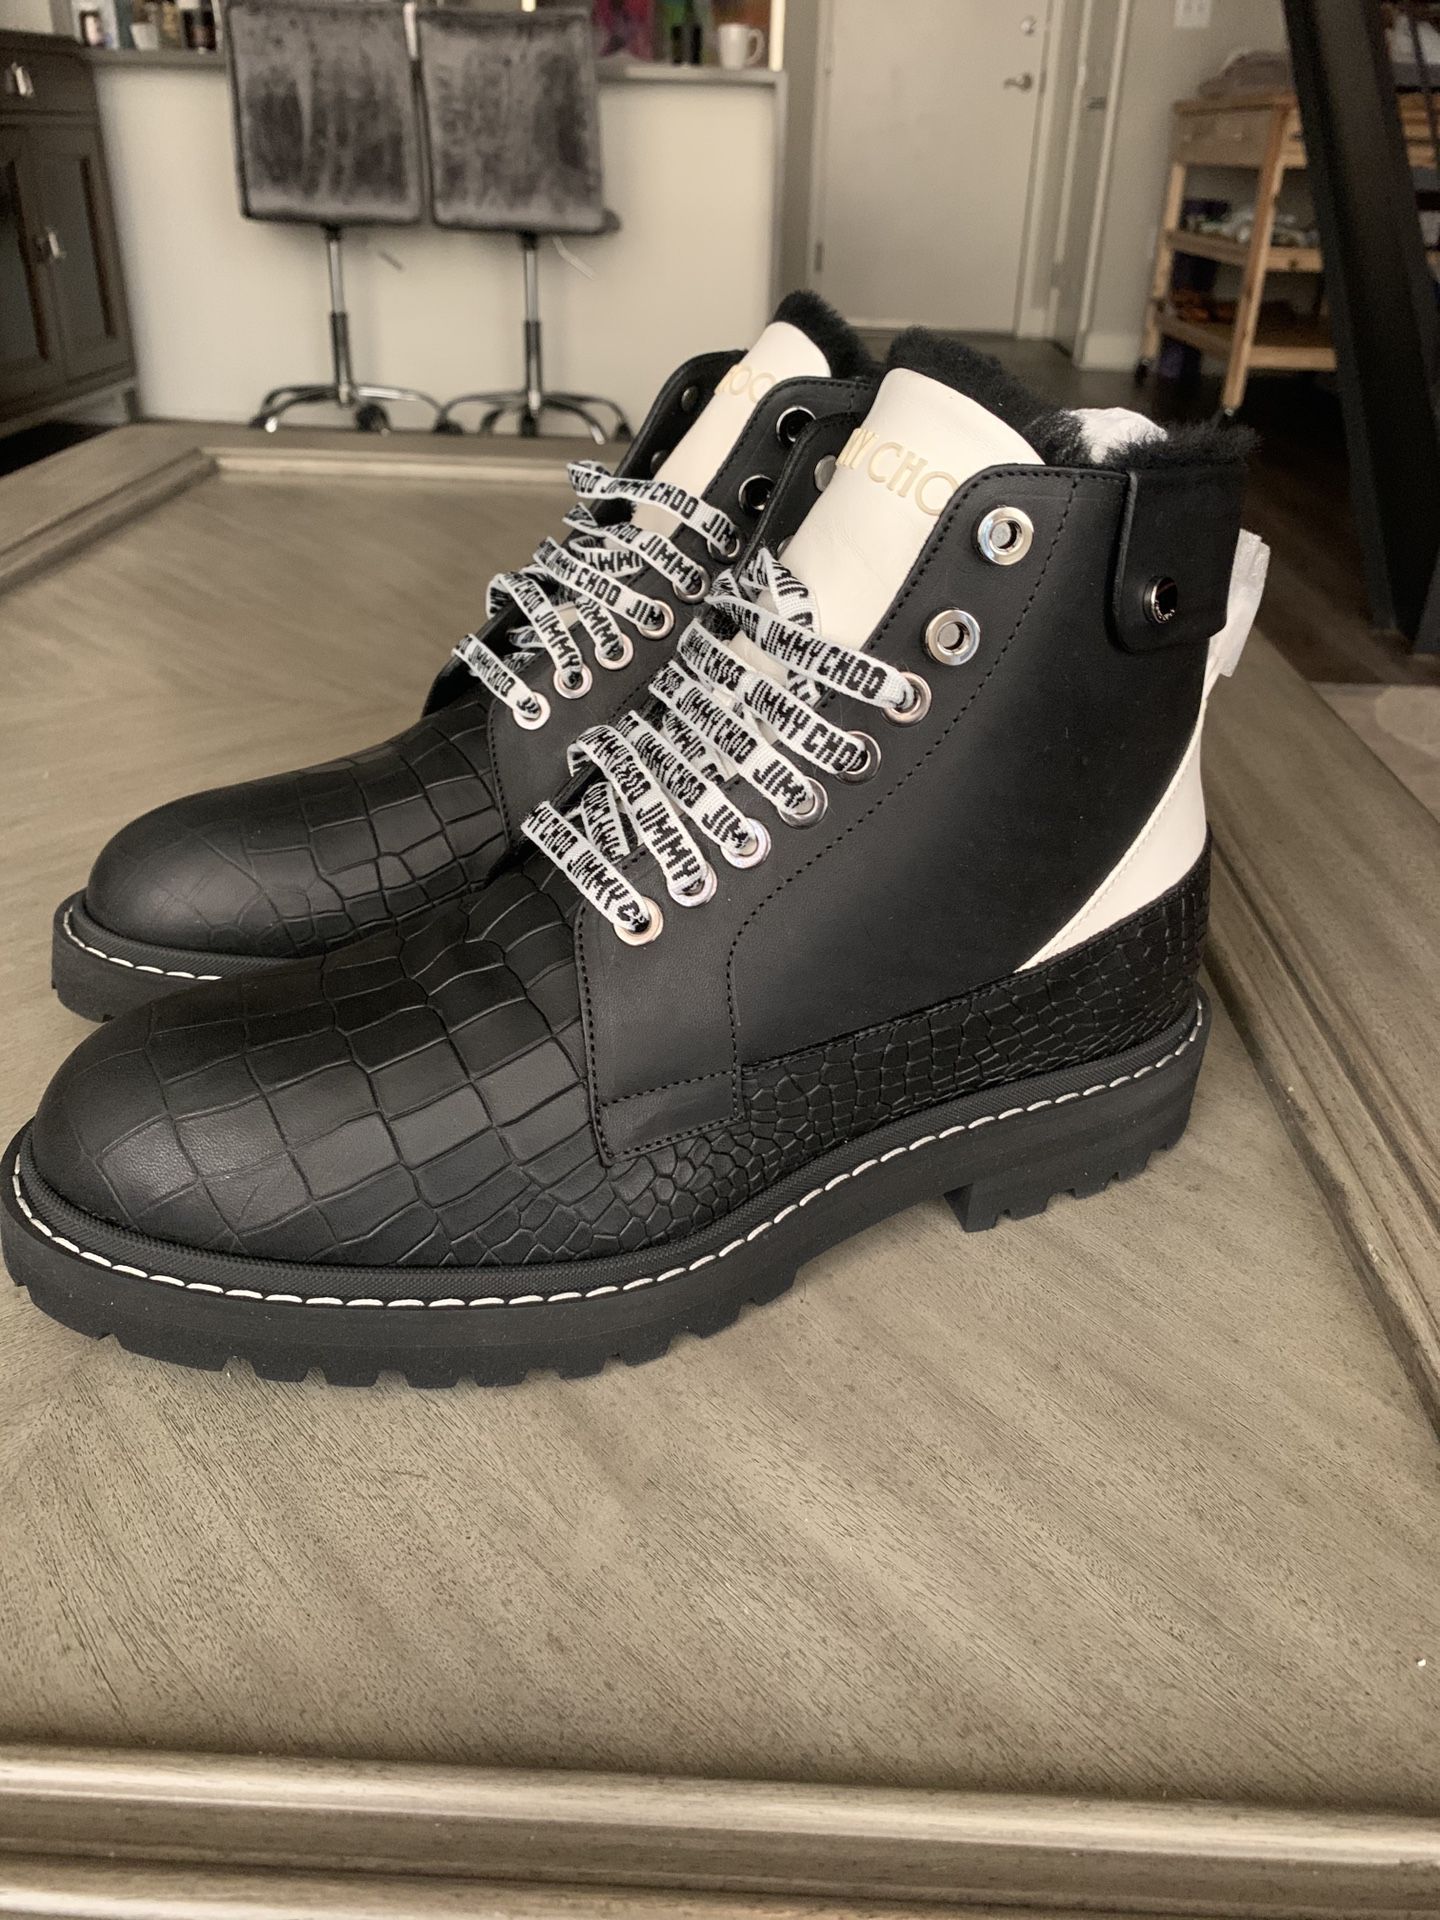 Jimmy CHOO Man boots. Brand new. Size 44 European